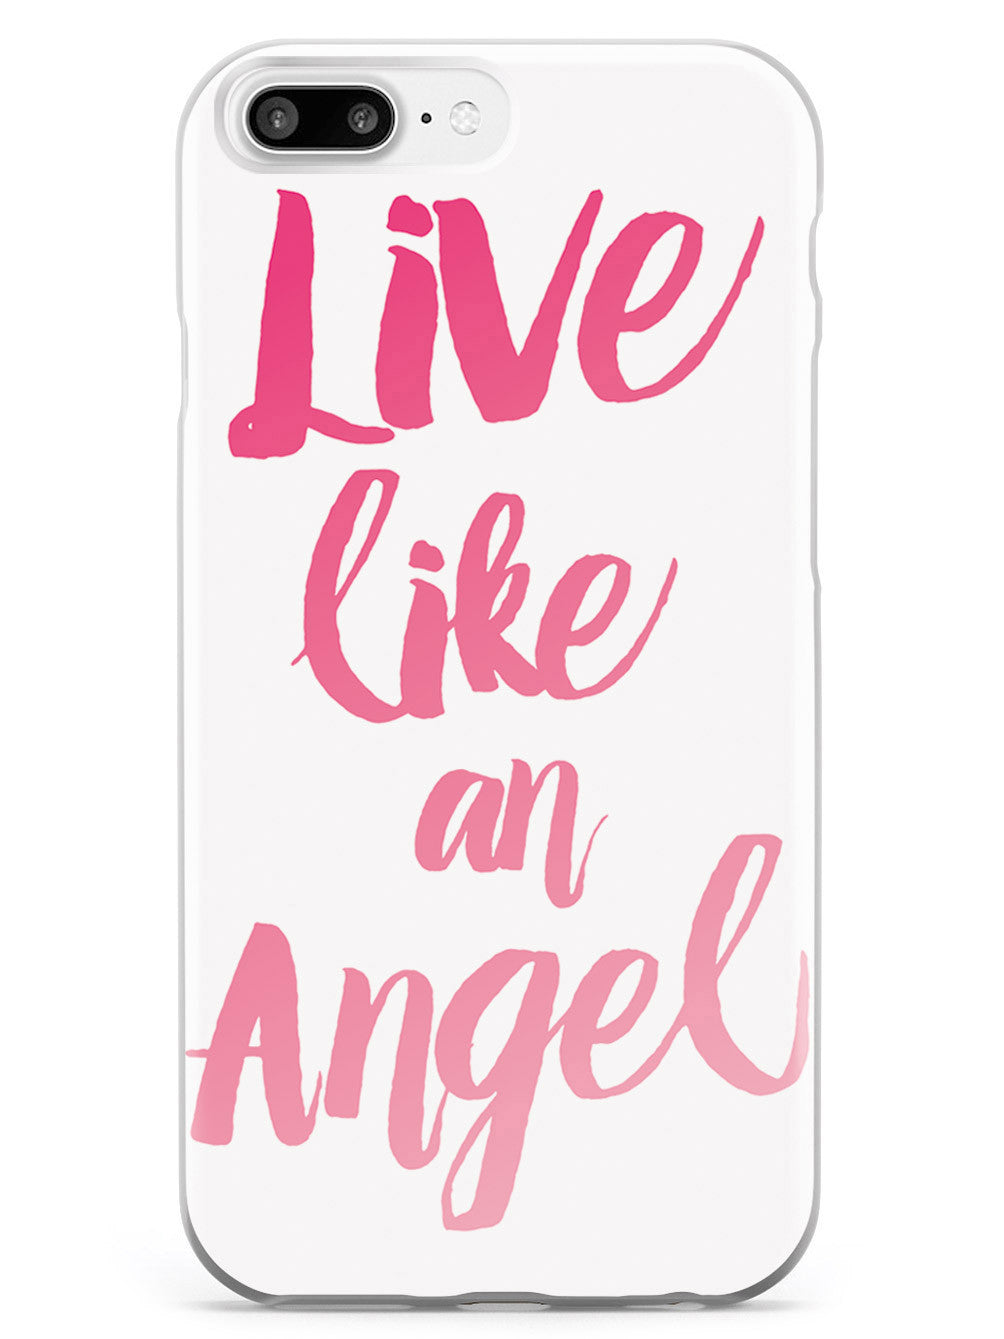 Live Like an Angel - Pink Case